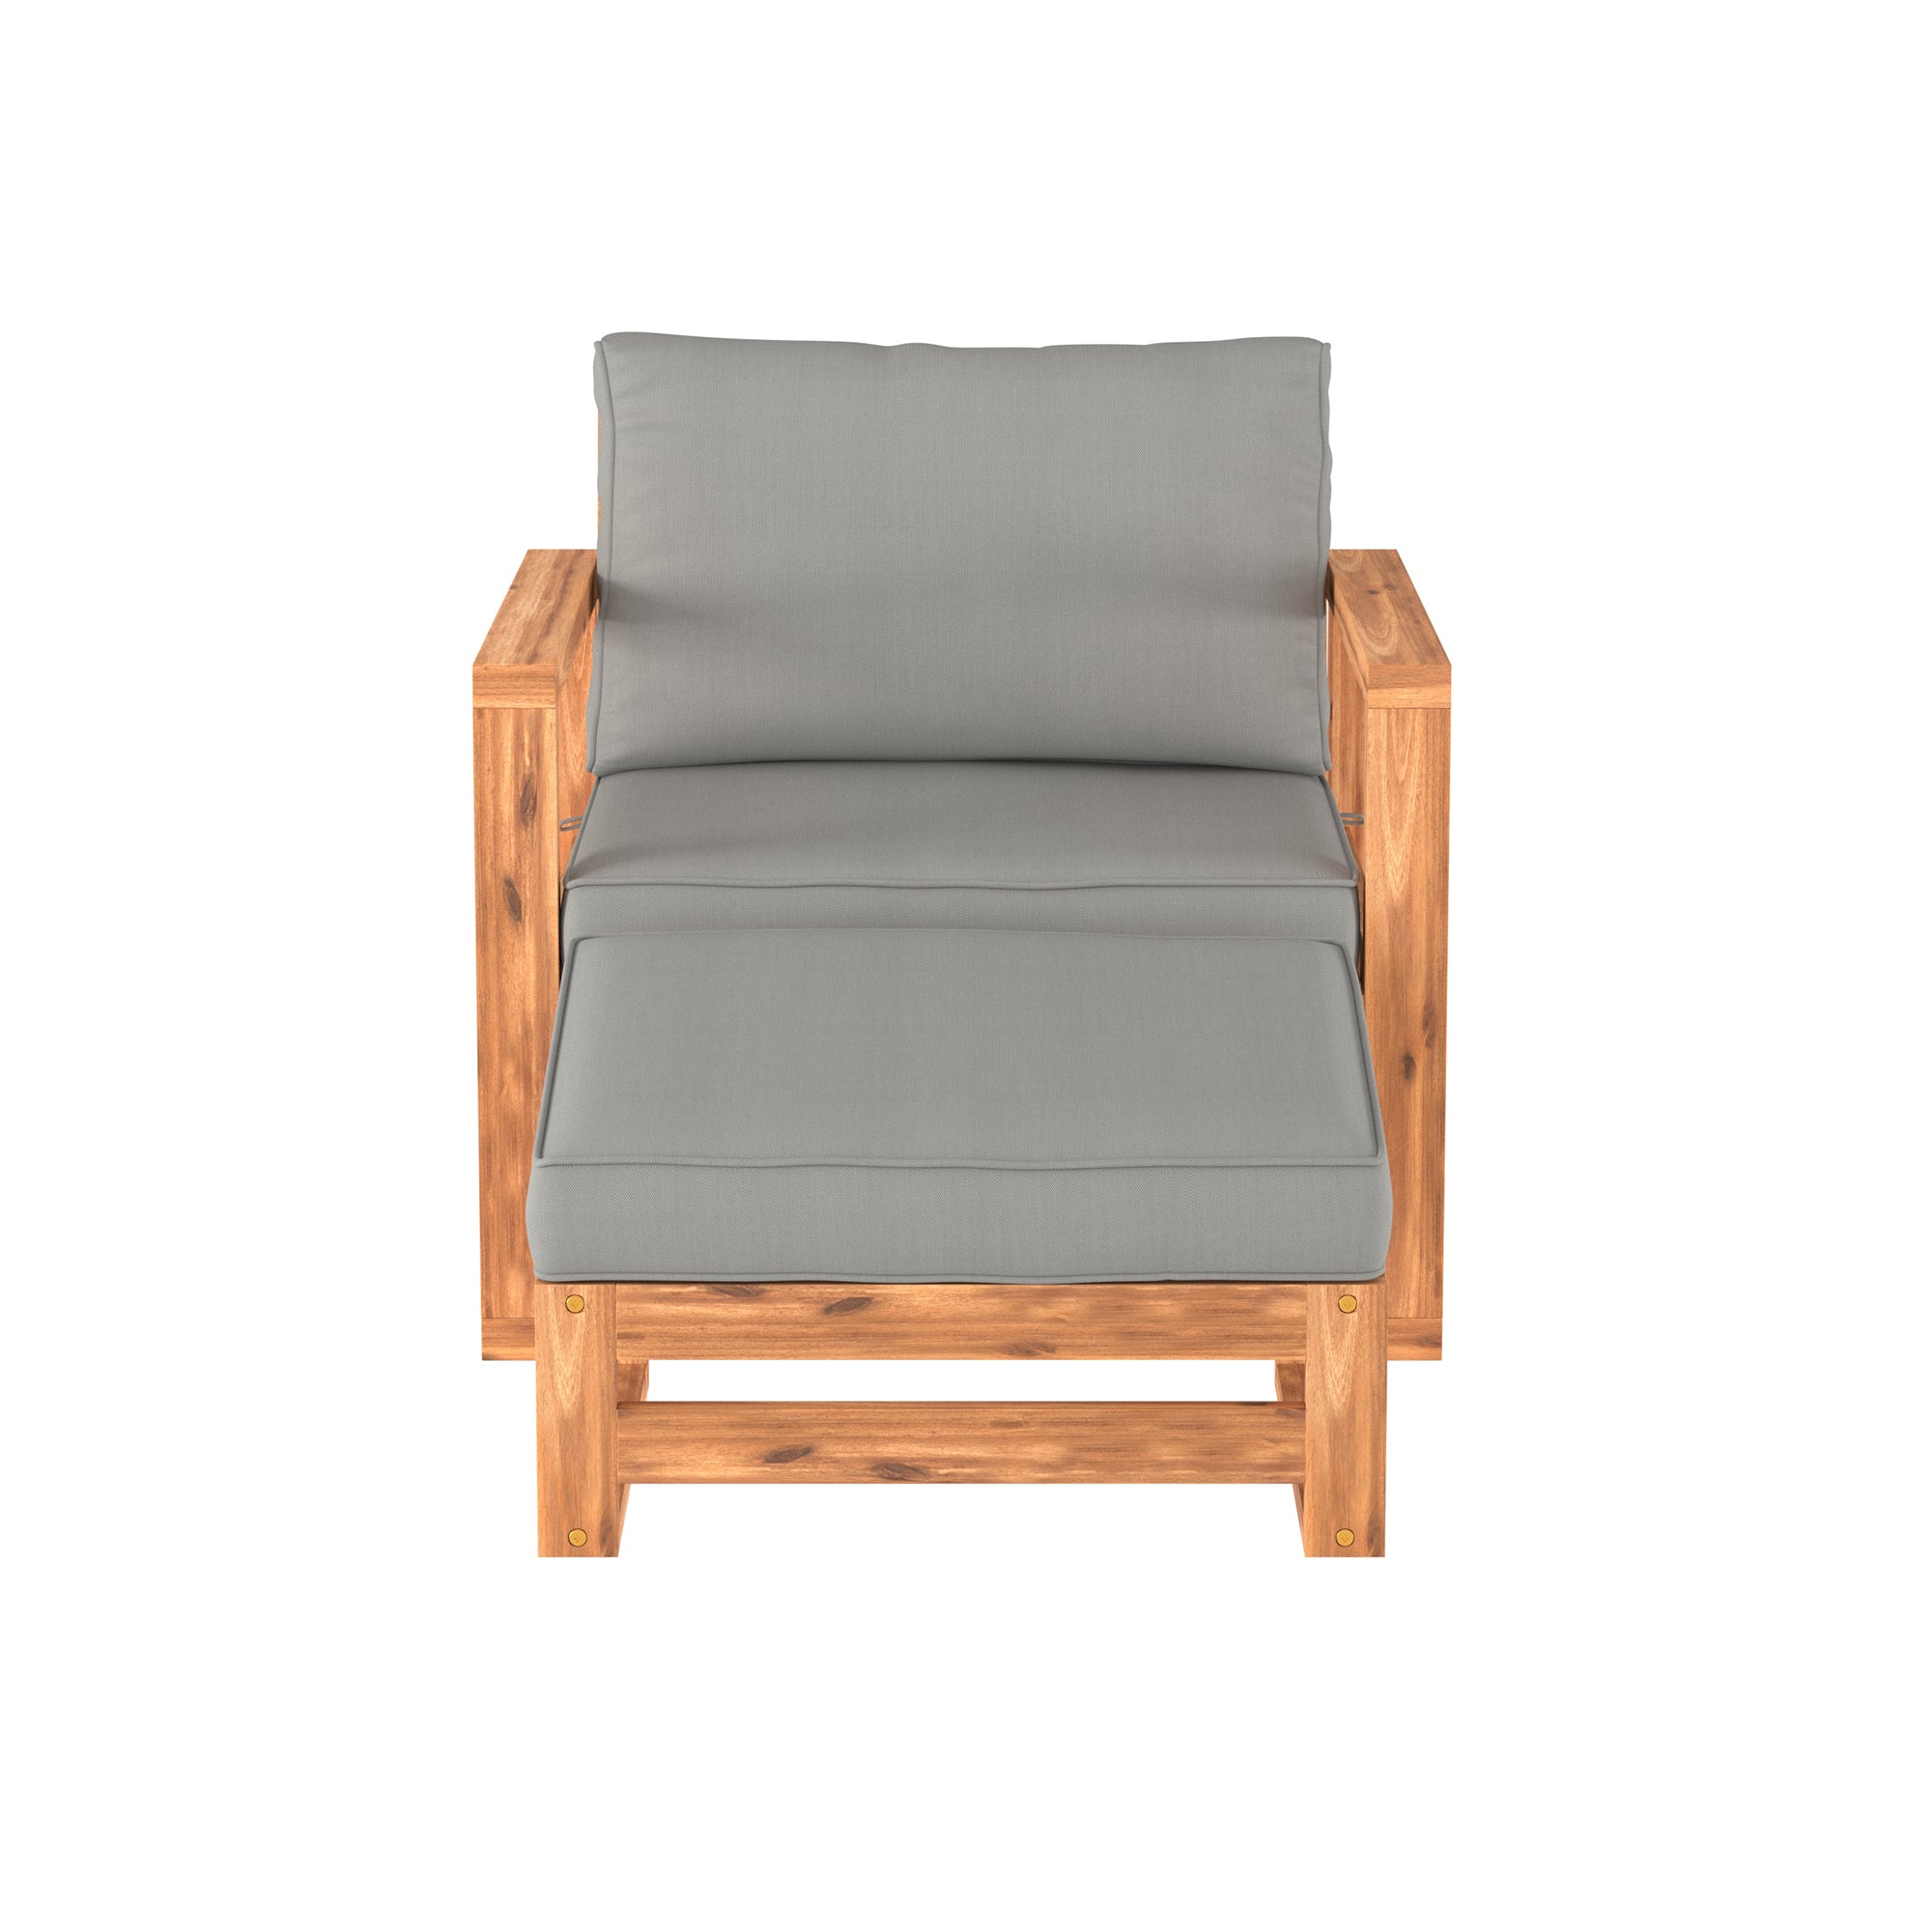 Modern Patio Chair and Ottoman - East Shore Modern Home Furnishings